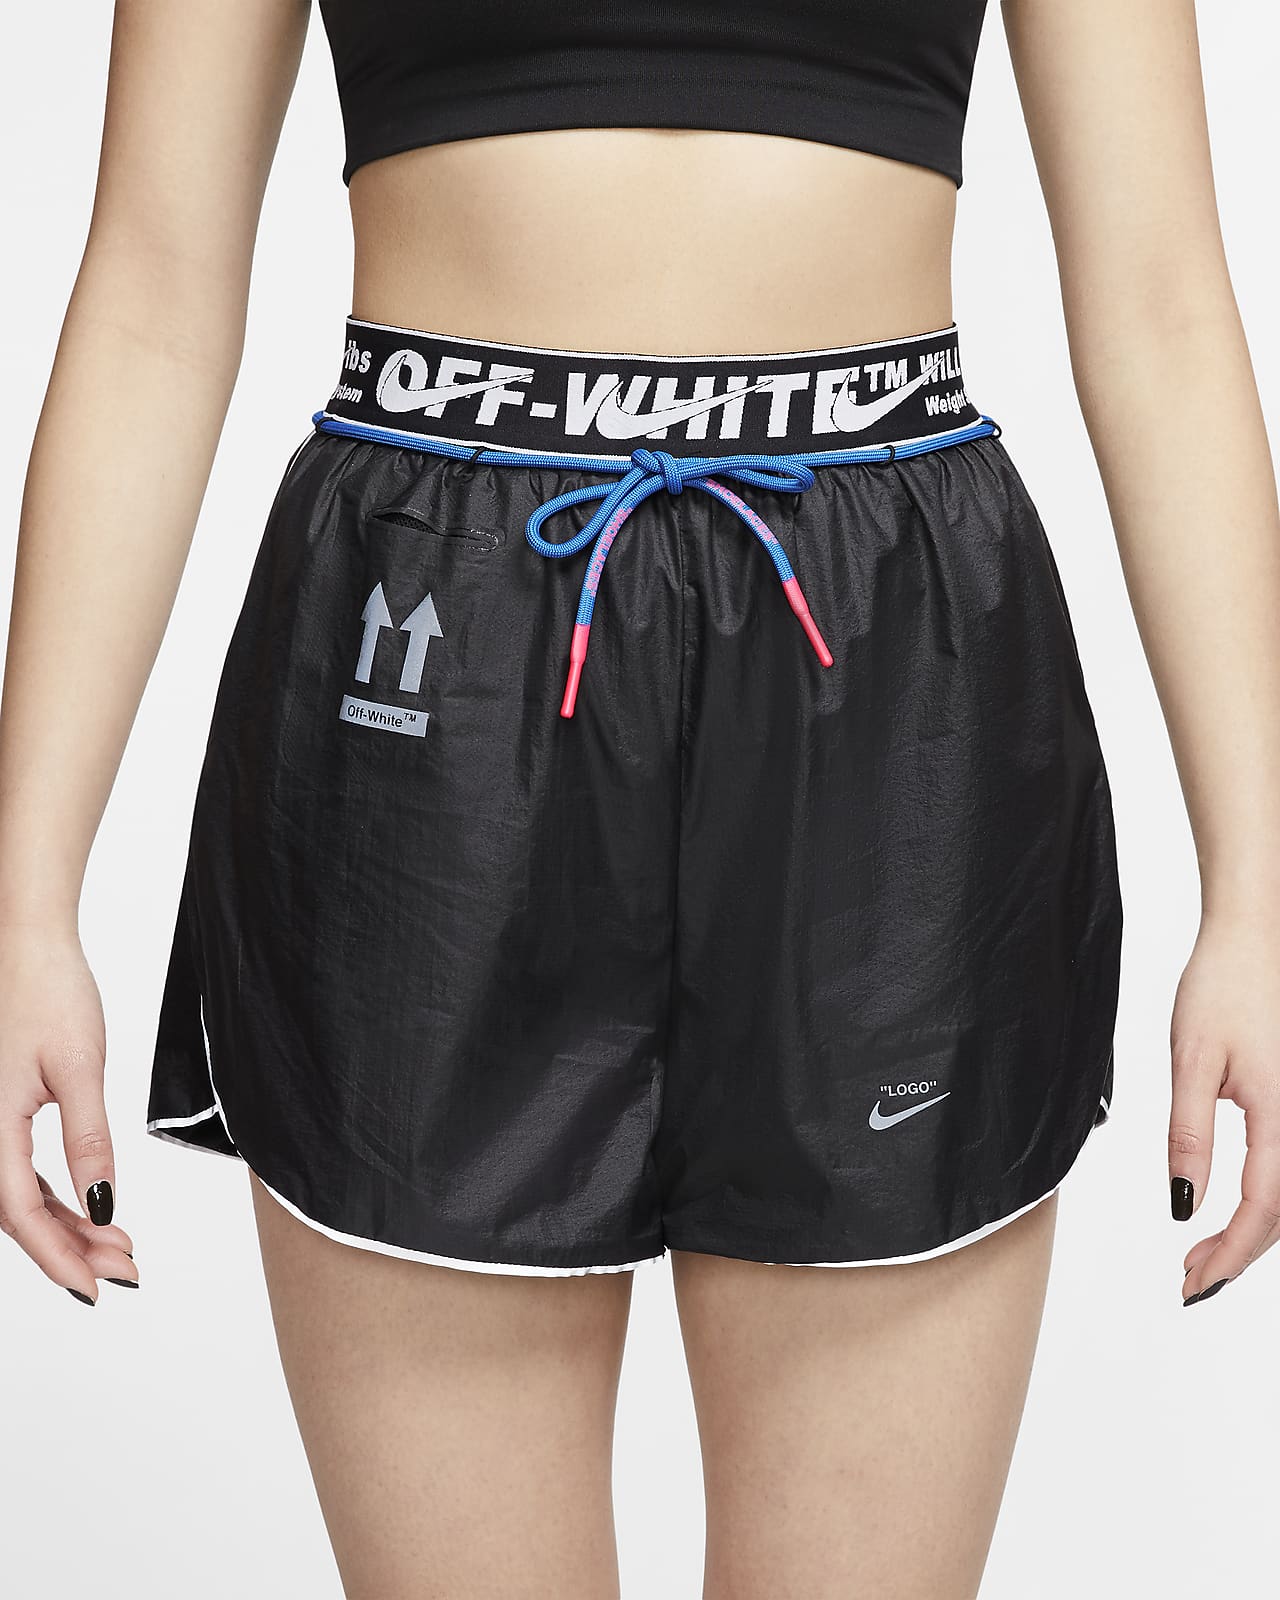 off white nike shorts women